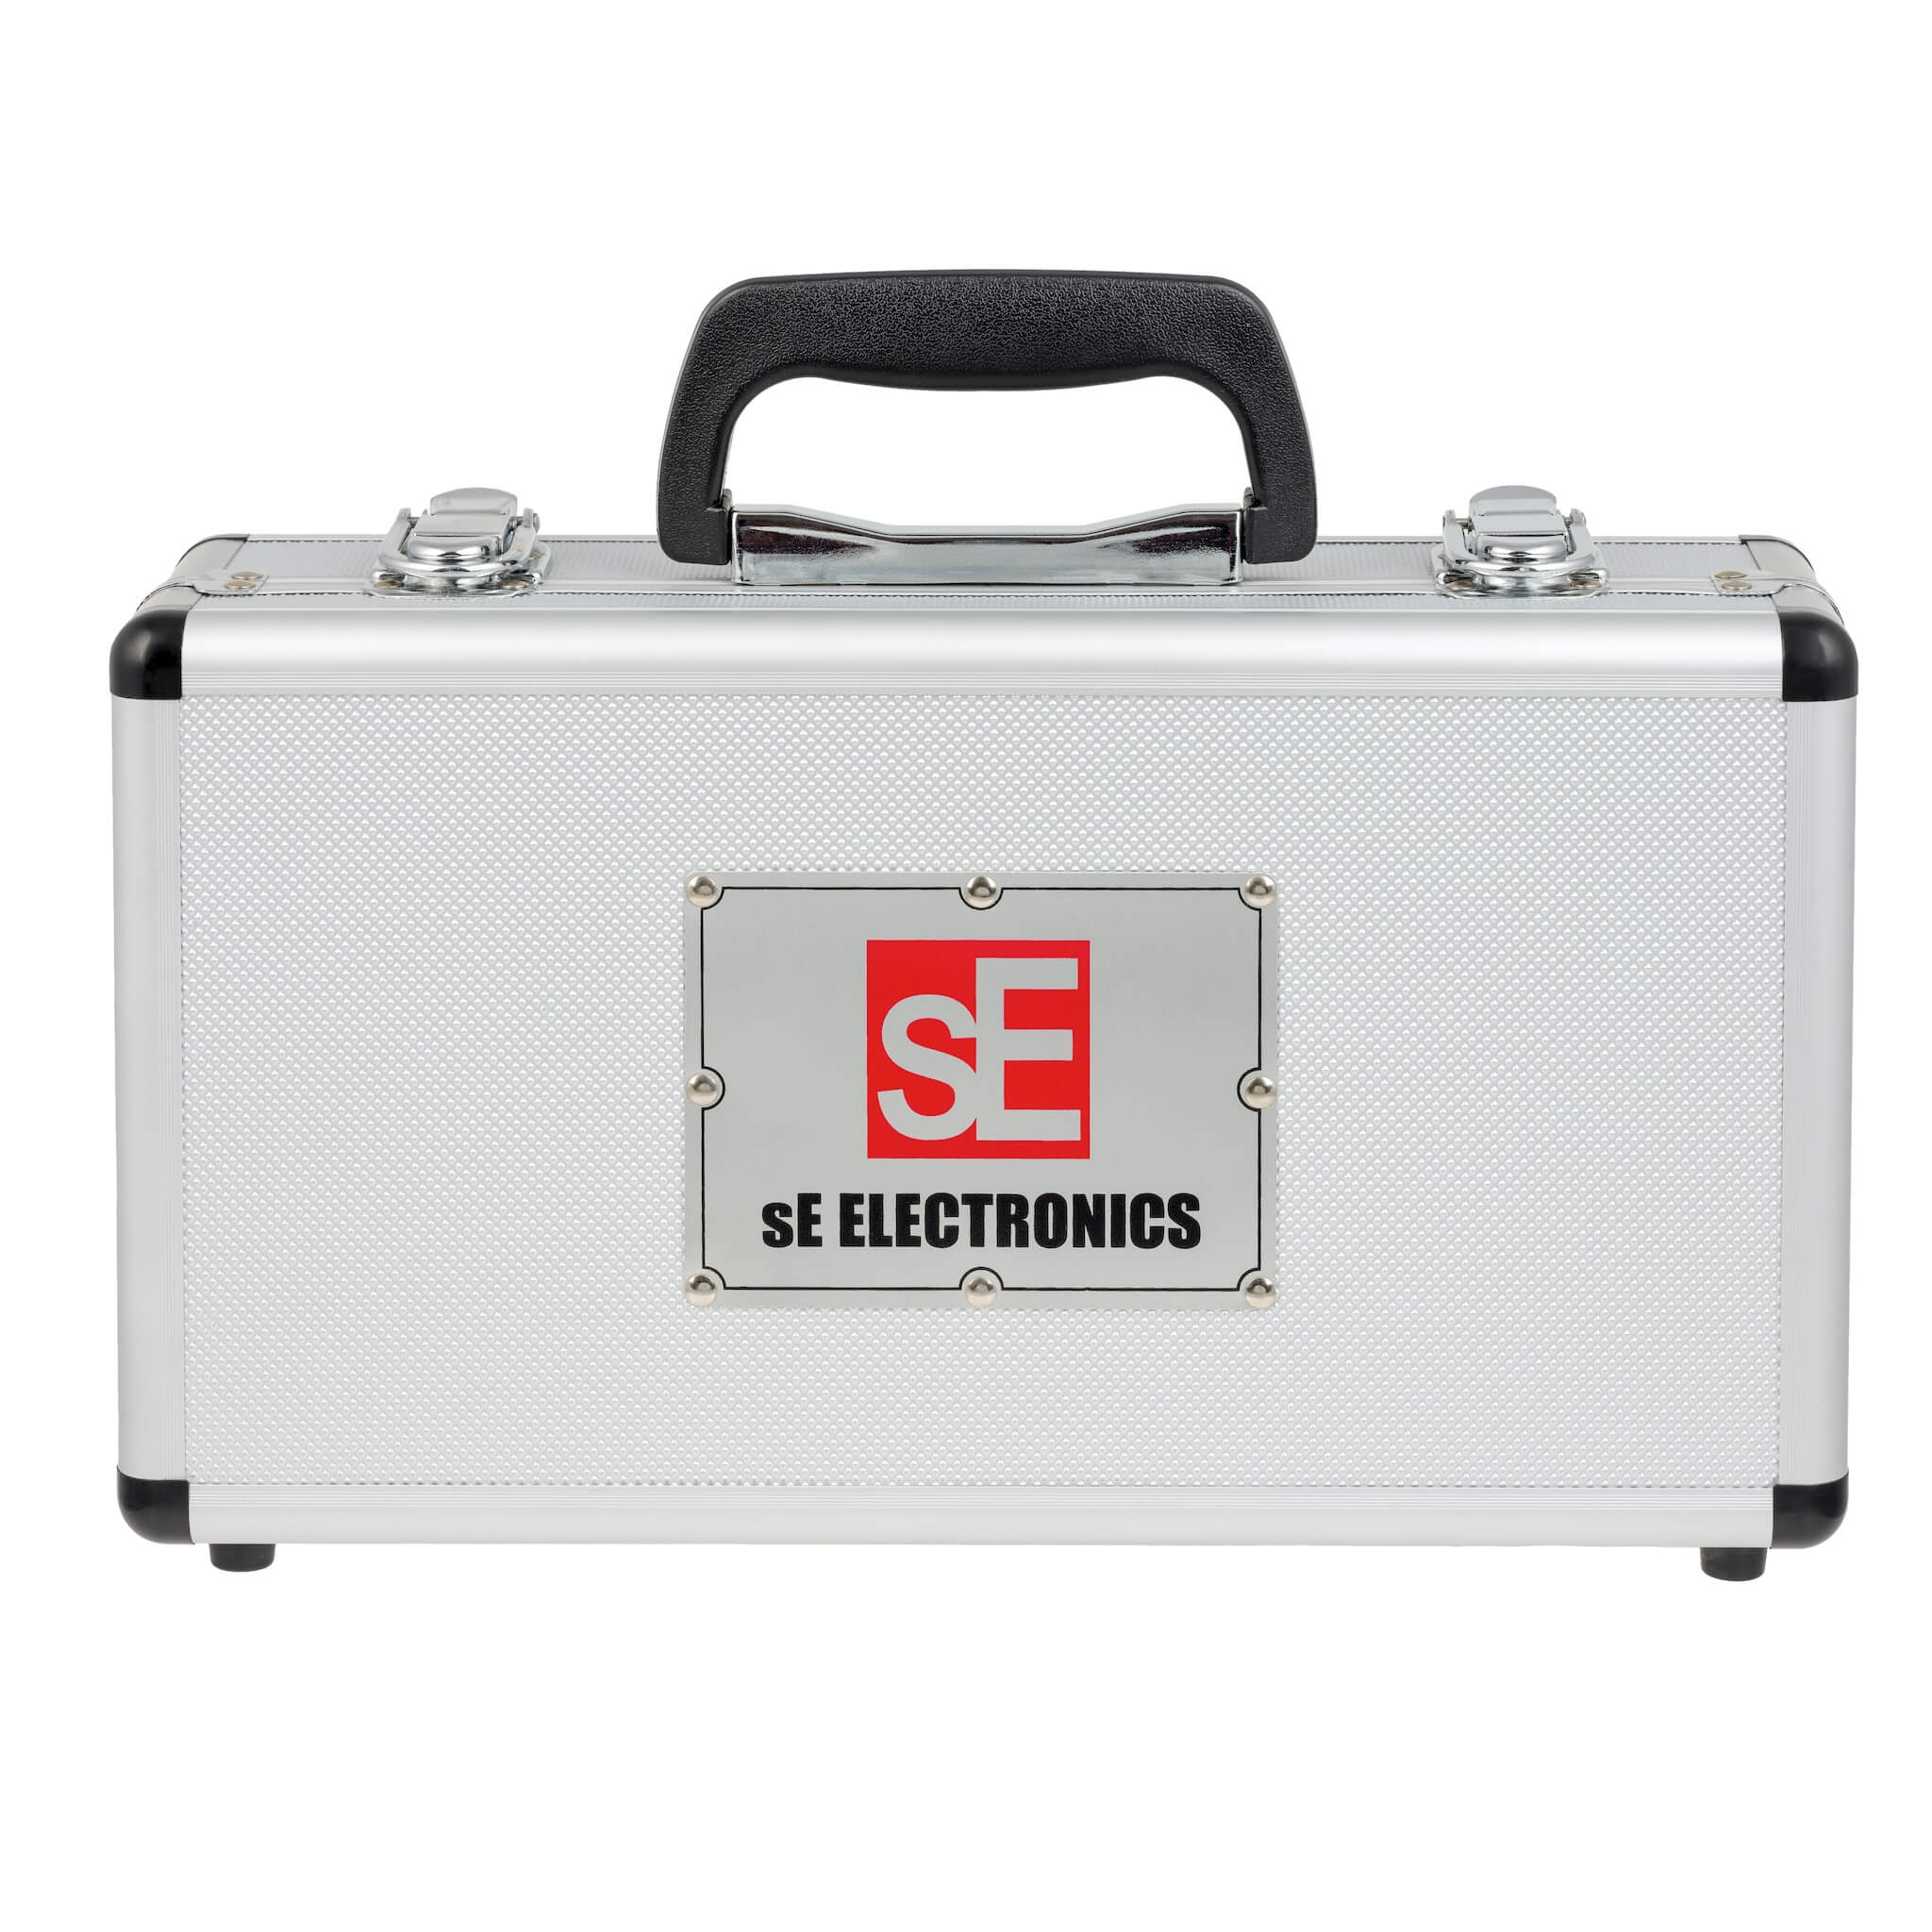 sE Electronics sE8 SP - Factory Matched Pair of sE8 Microphones, case closed